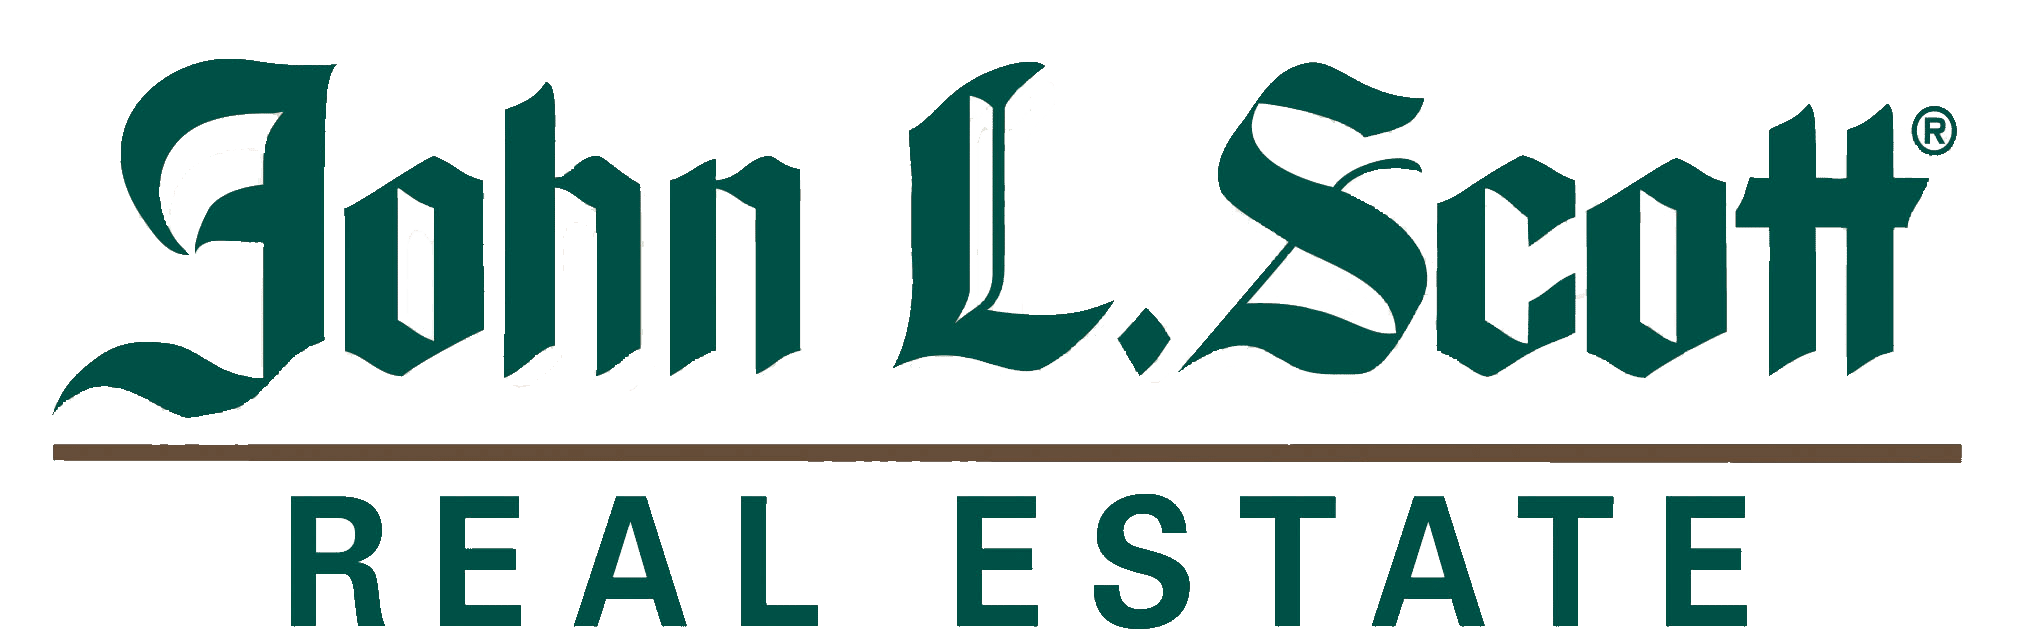 John-L-Scott-logo-transparent